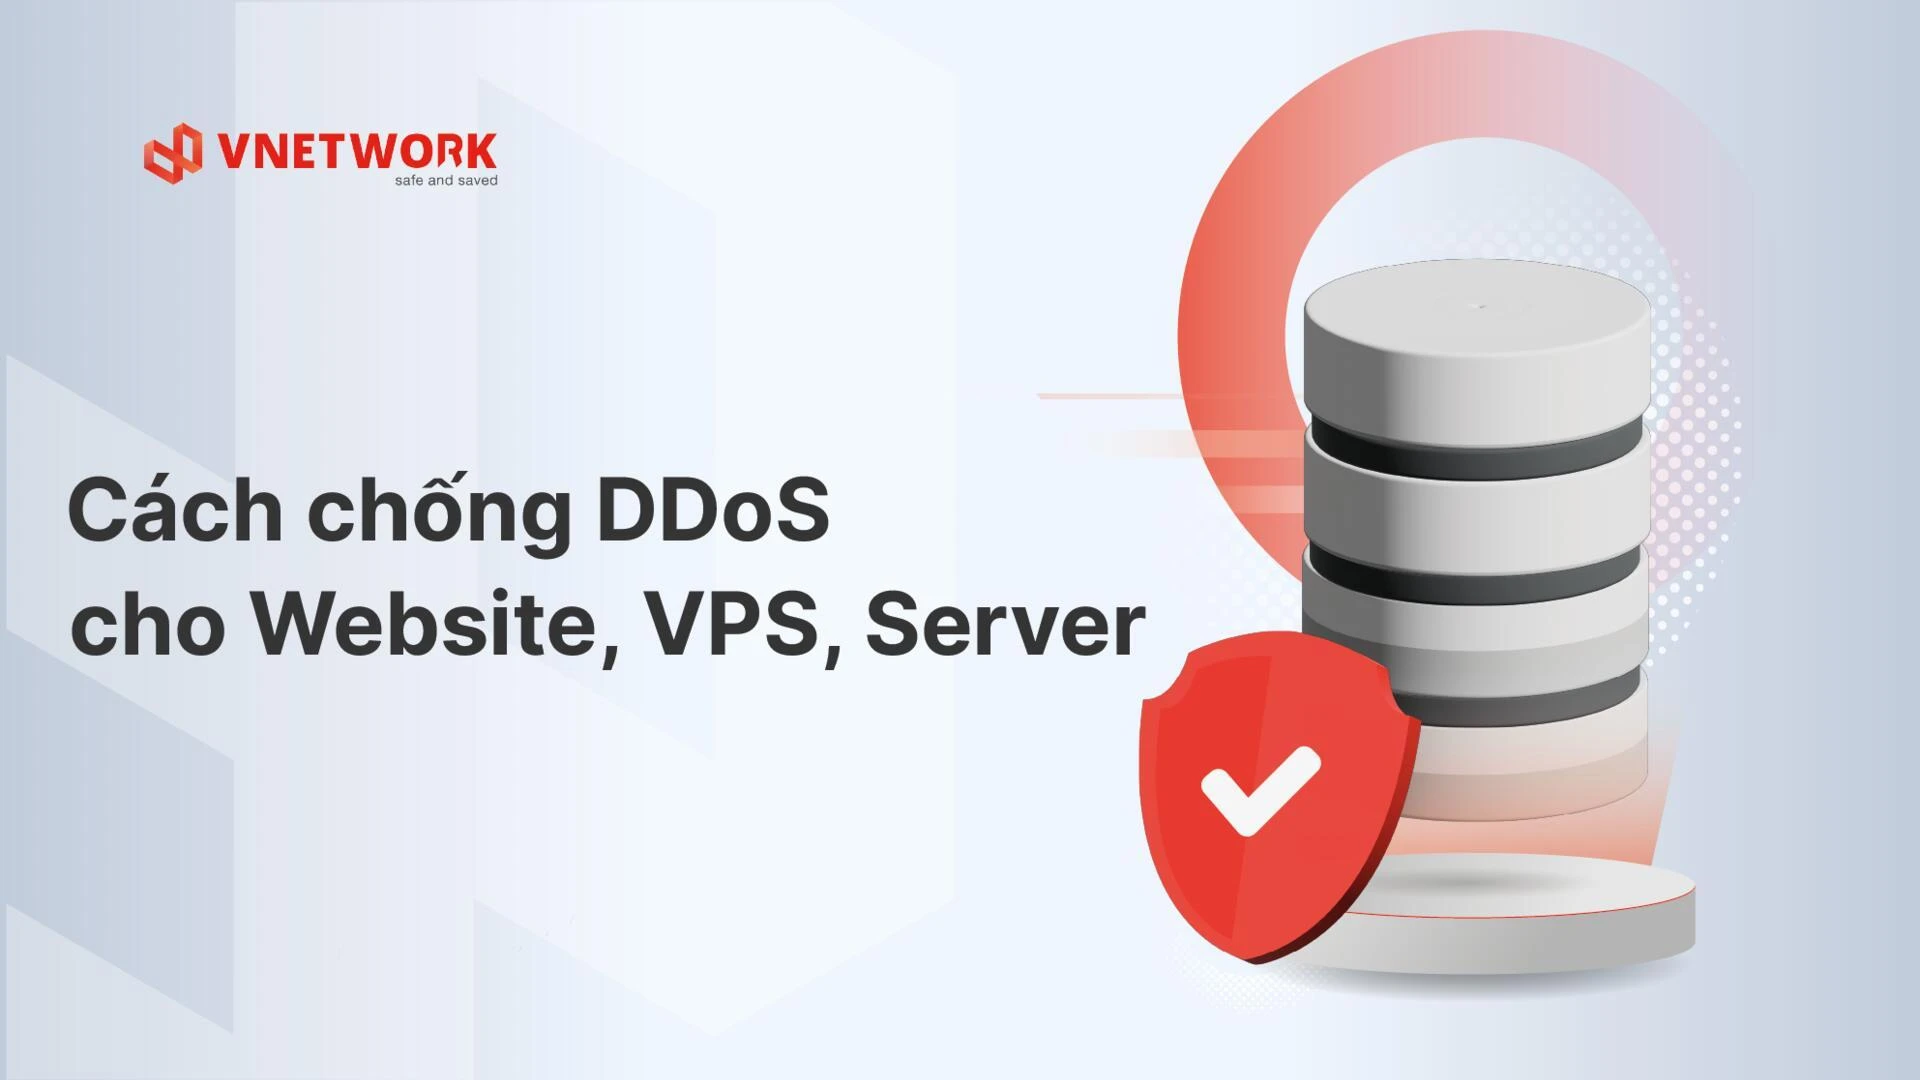 Effective ways to prevent DDoS attack for Website, VPS, Server